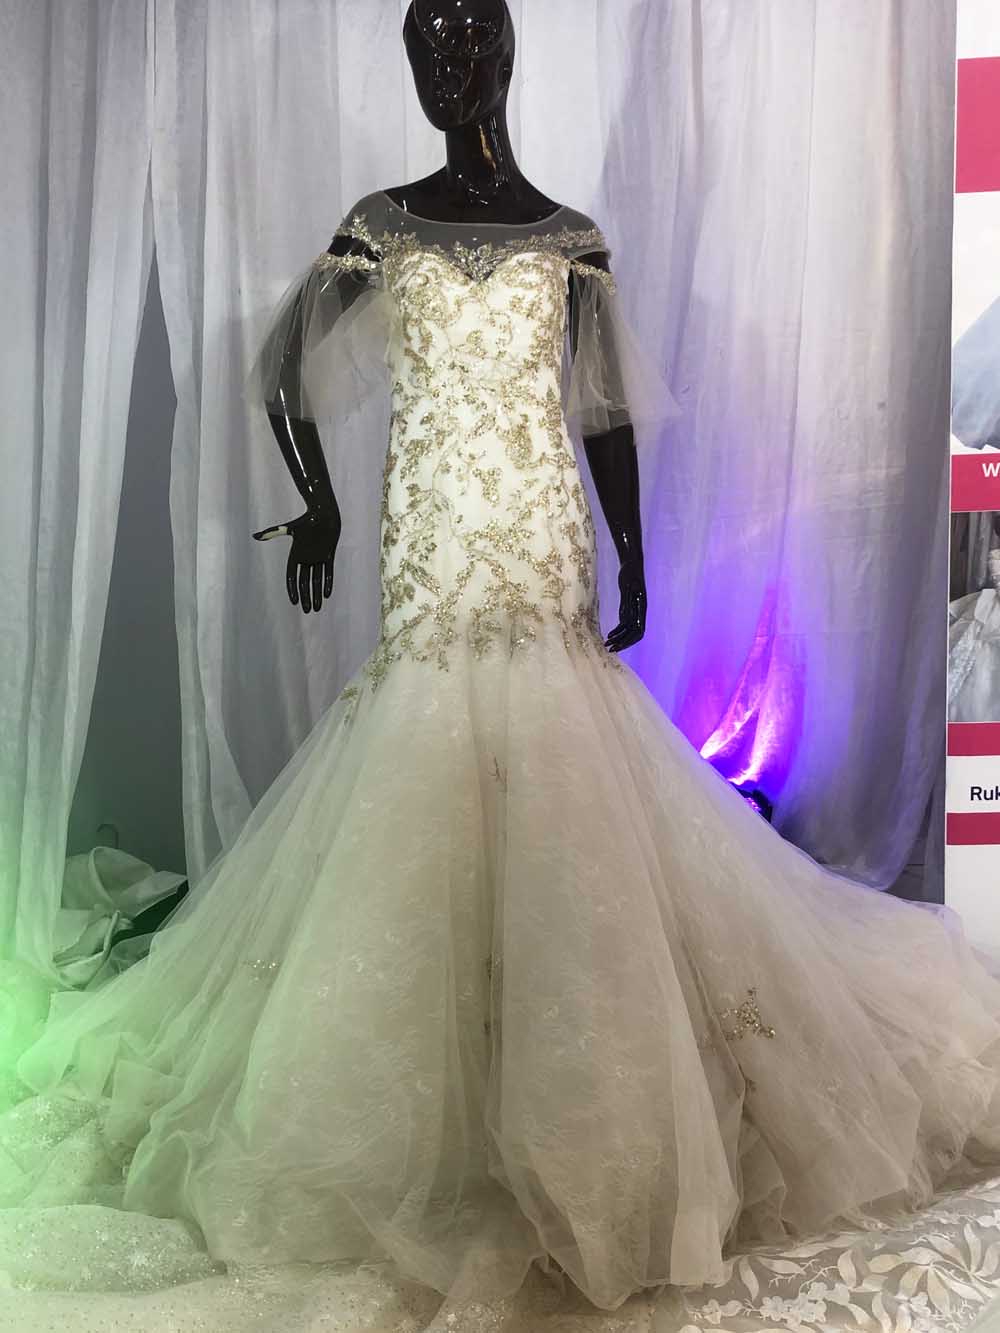 Diz Bridal Parlour Uganda Services: Bridal Fashion, Wedding Styling, Bridal...